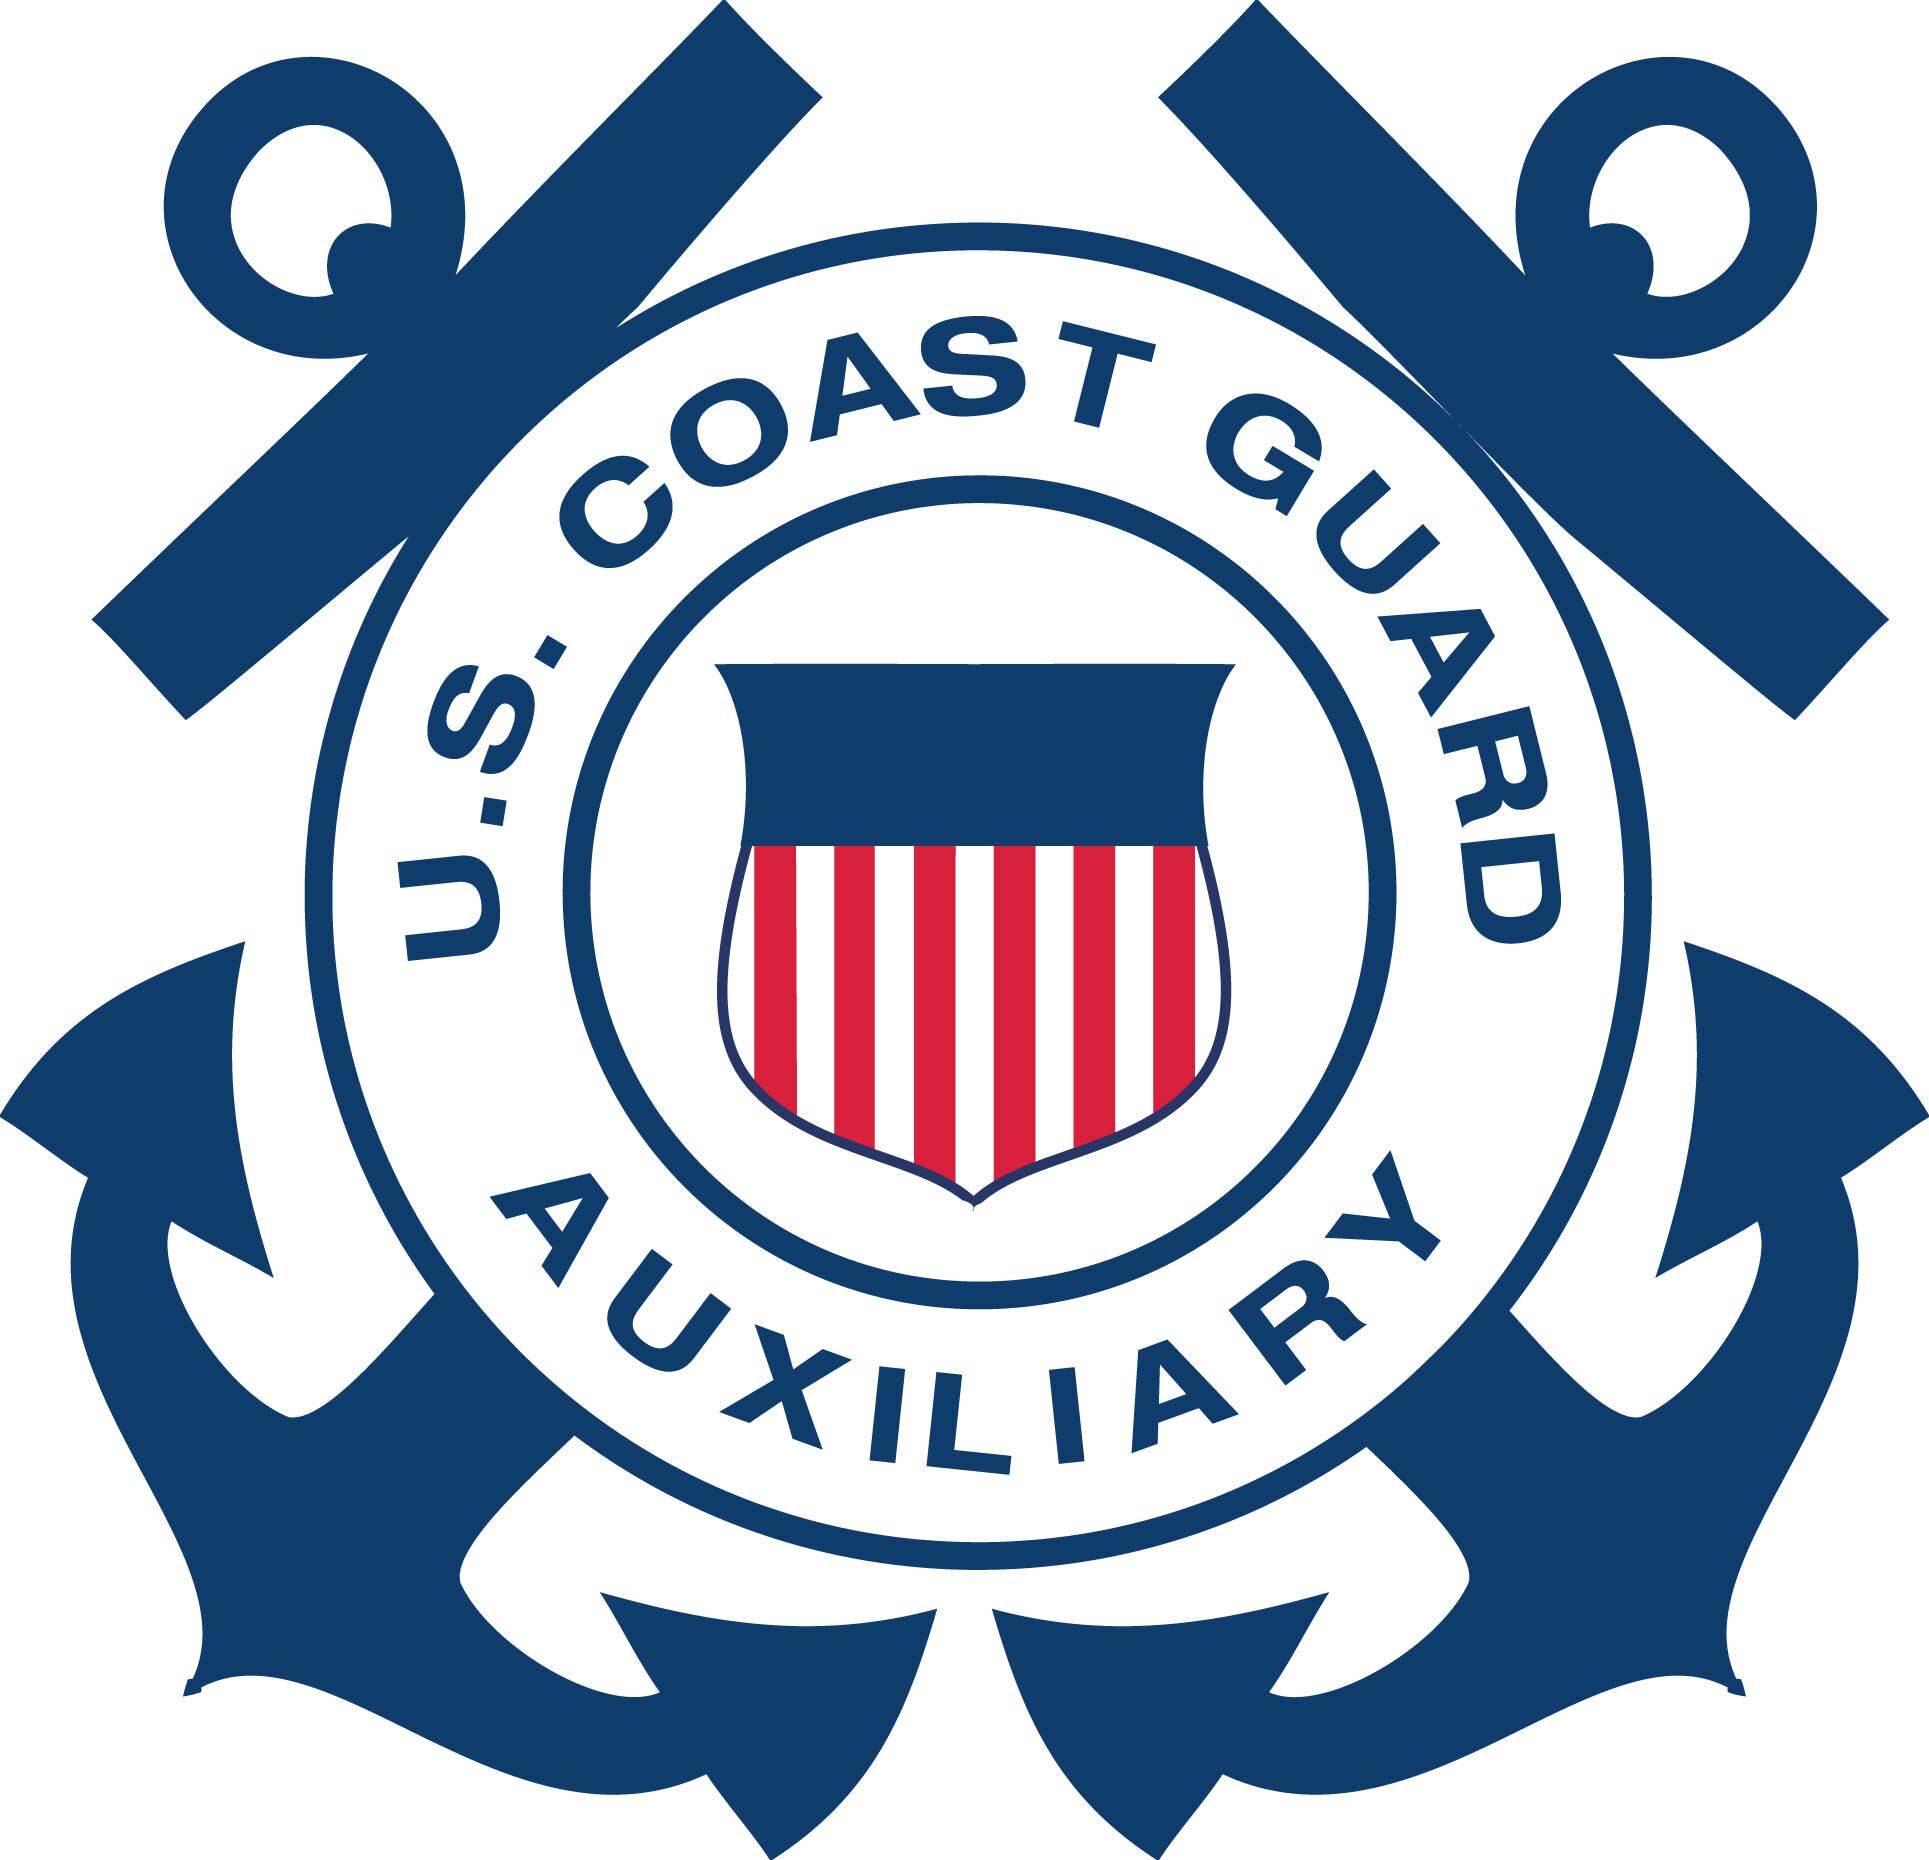 Red, white, and blue U.S. Coast Guard Auxiliary logo.